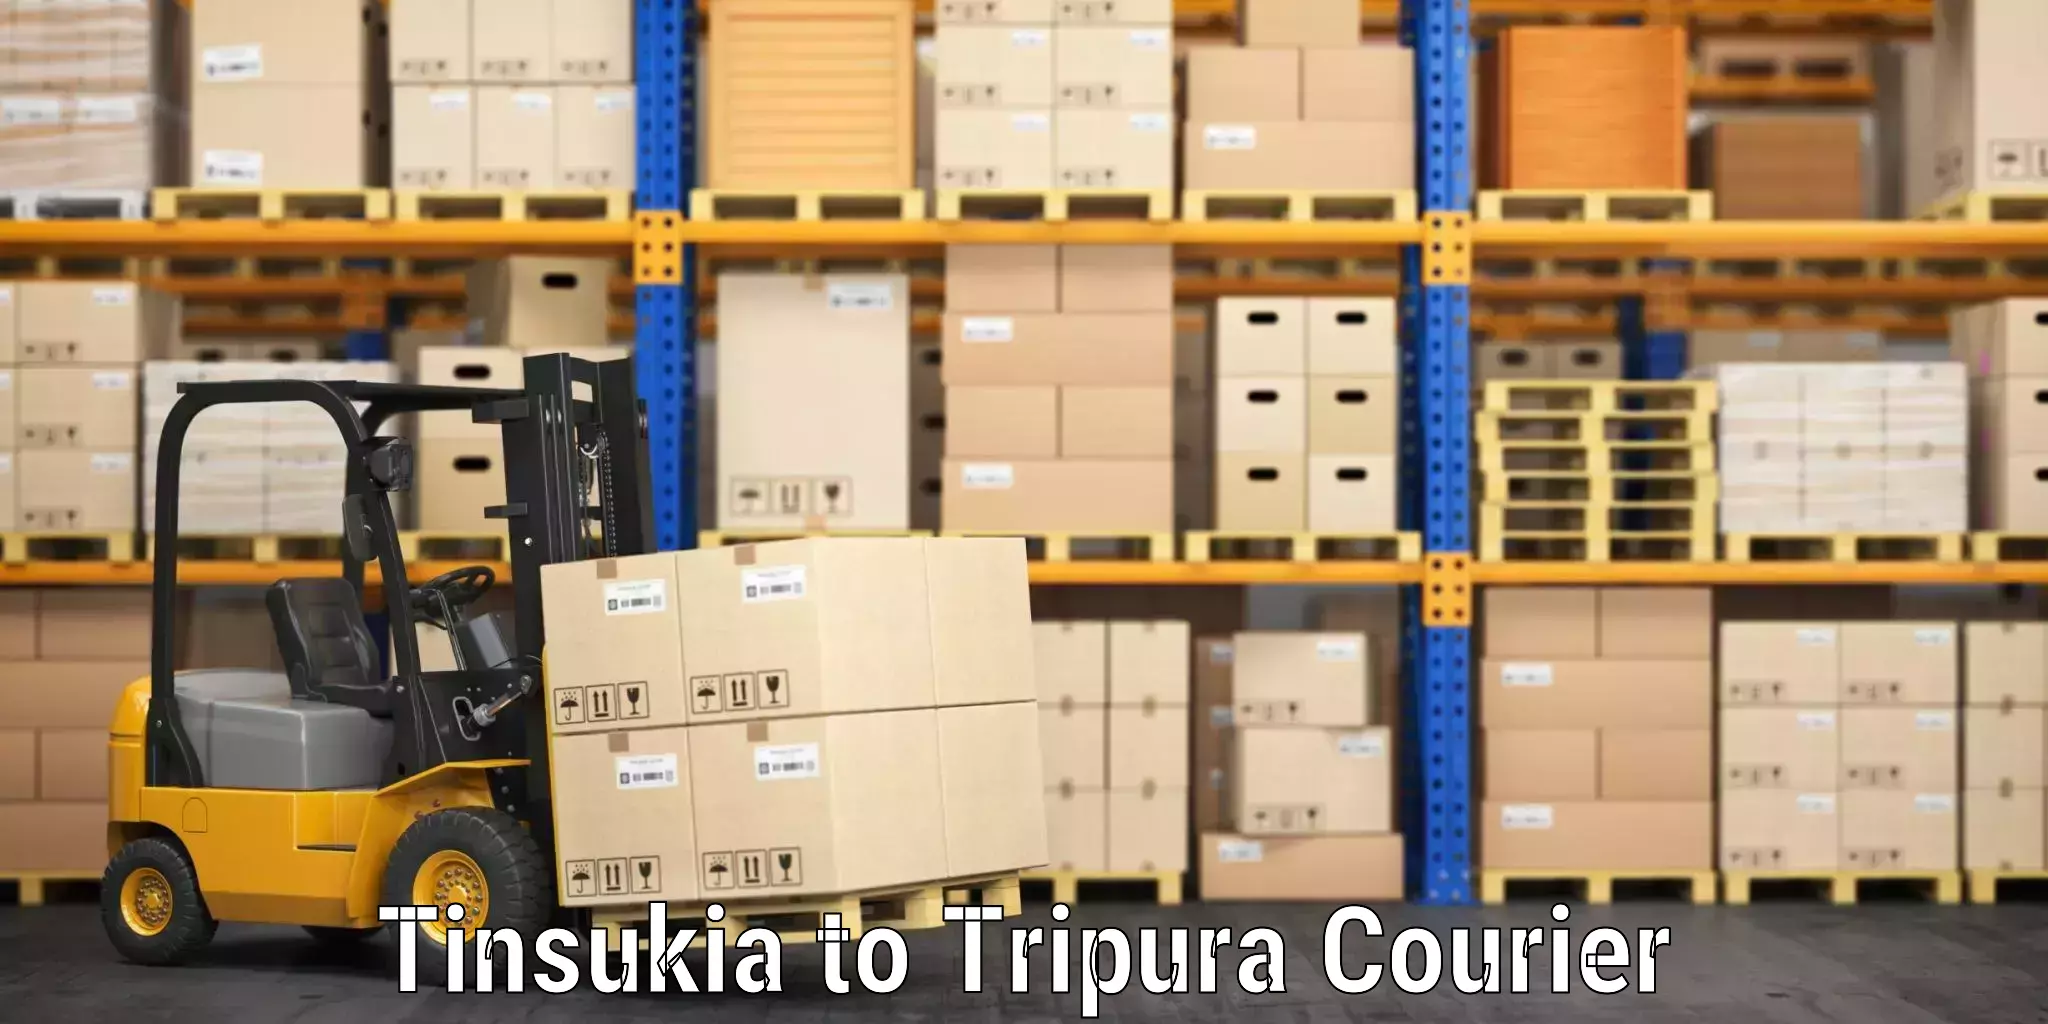 Urgent luggage shipment Tinsukia to Dhalai